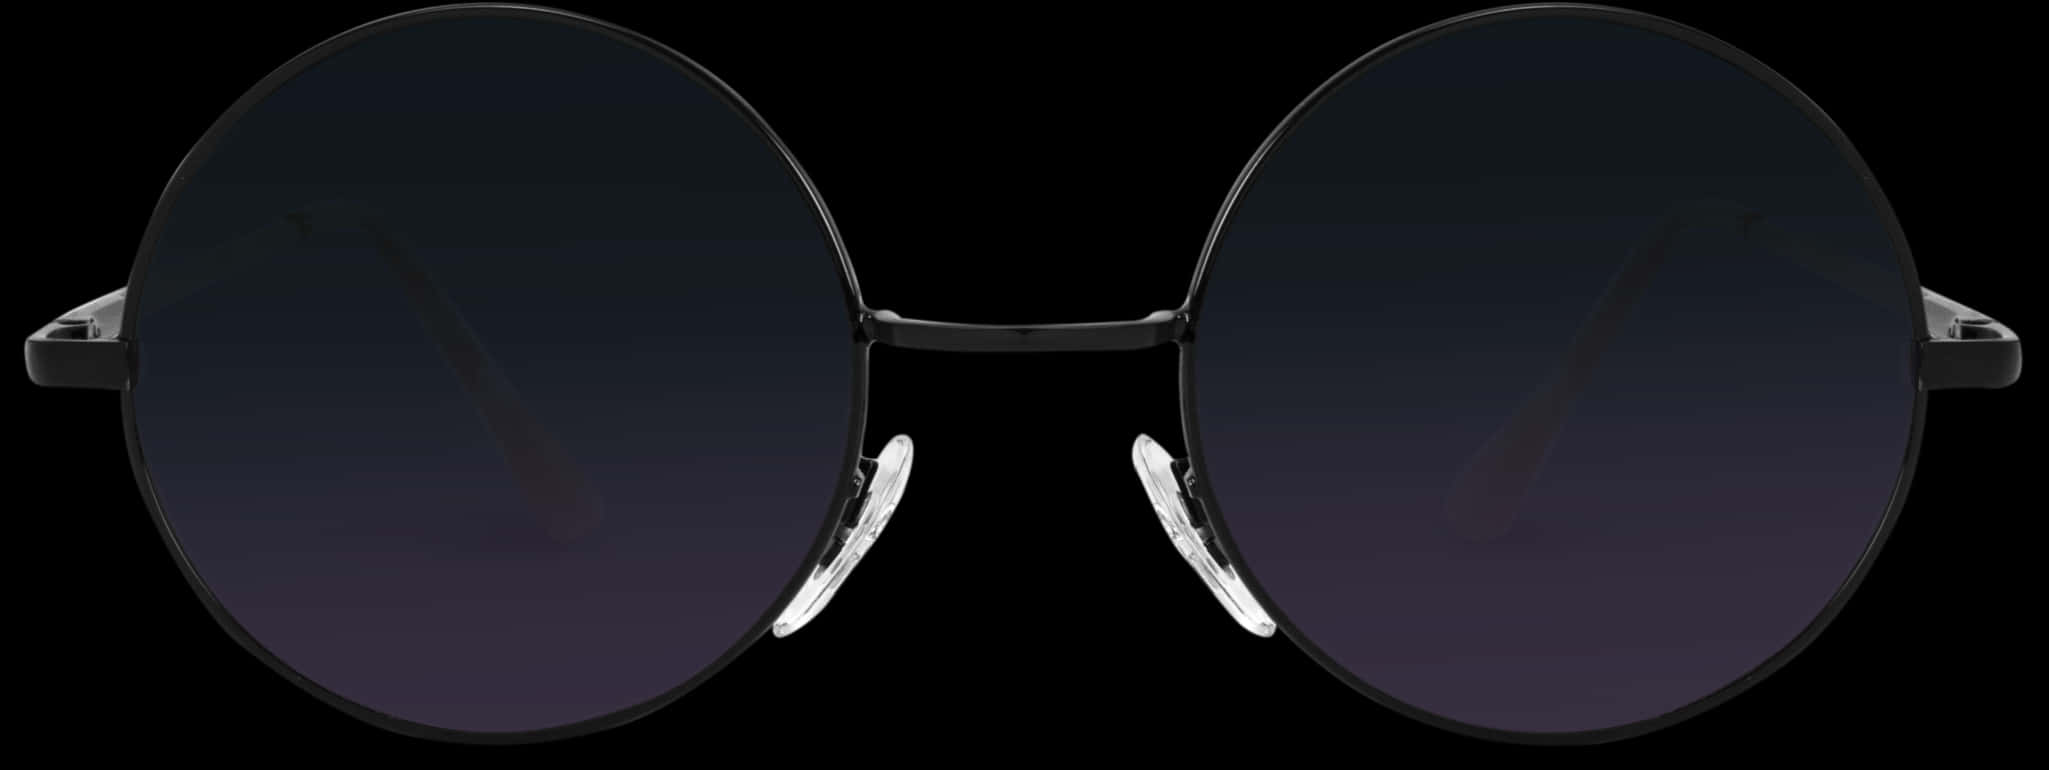 Round Black Sunglasses Isolated